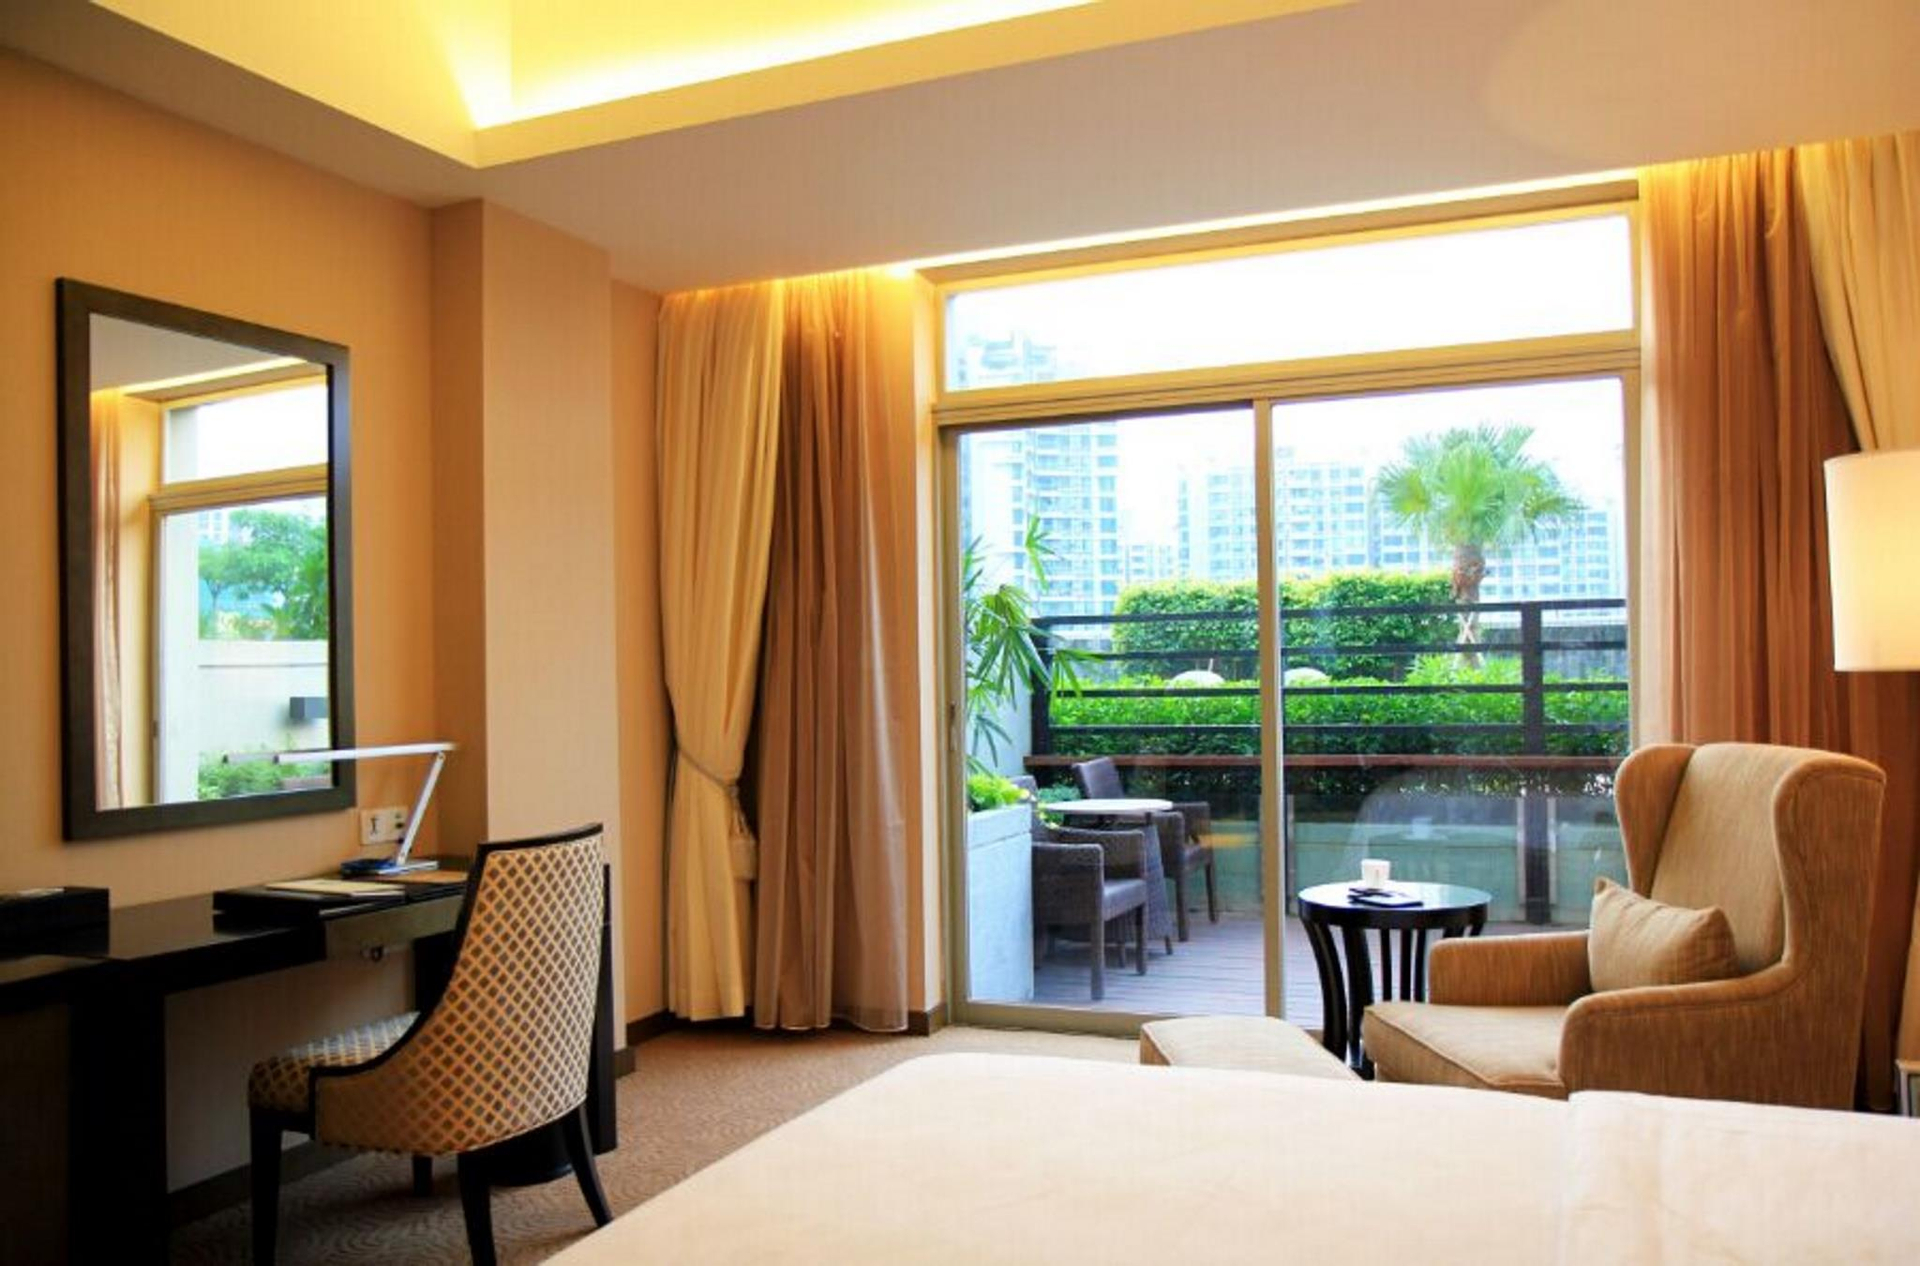 Bedroom 3, Jiaxin Conifer Hotel Shunde, Foshan